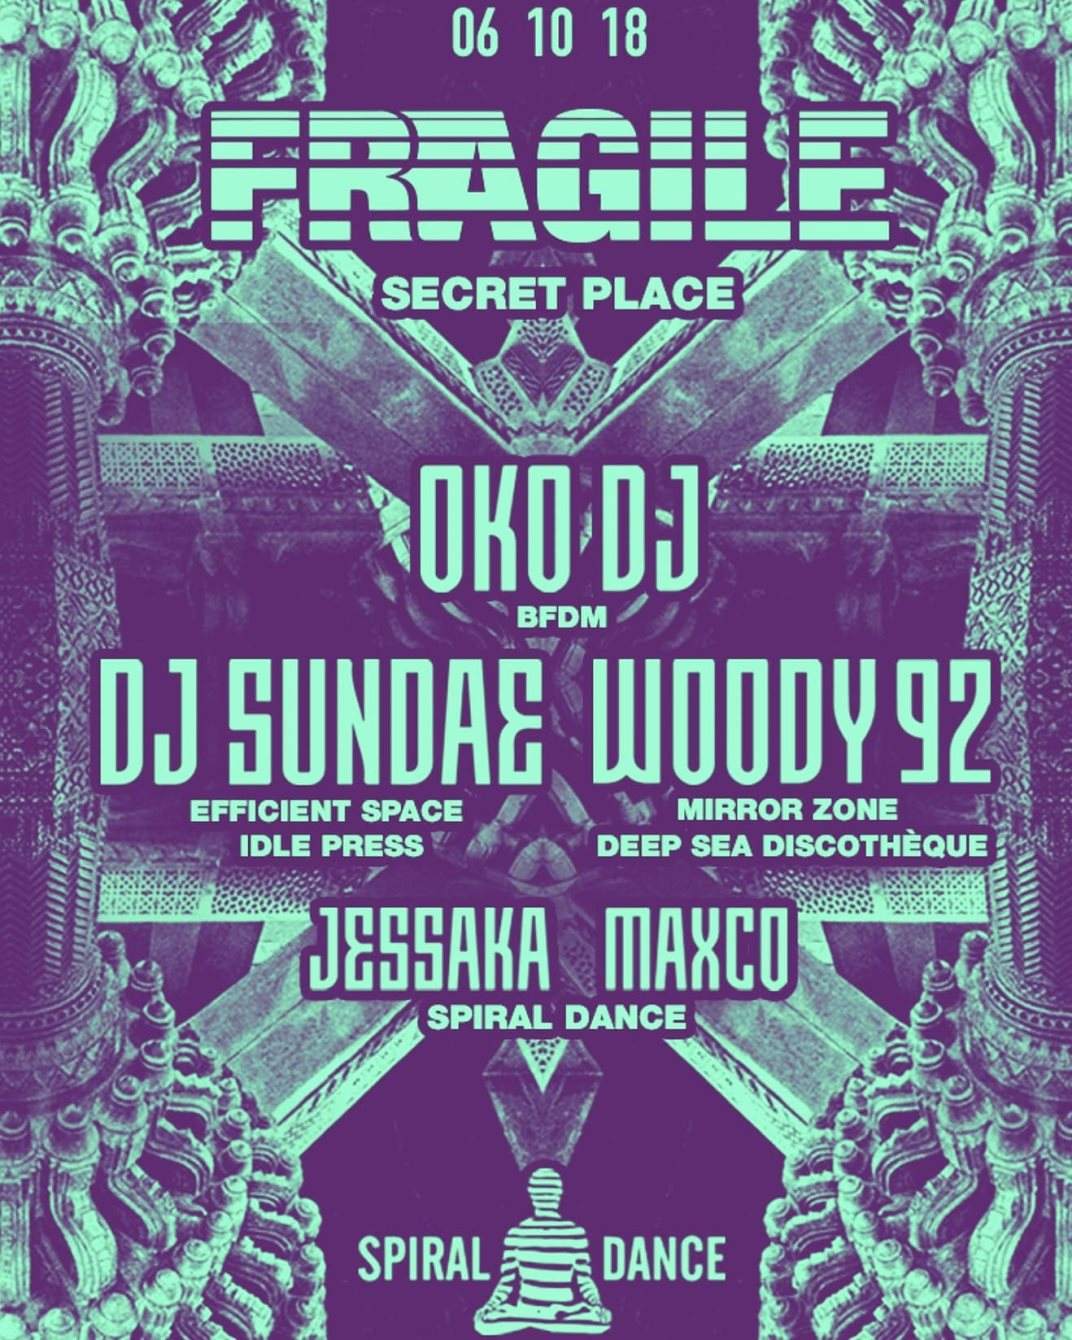 Fragile 3 - DJ Sundae, OKO DJ, Woody 92 - フライヤー表